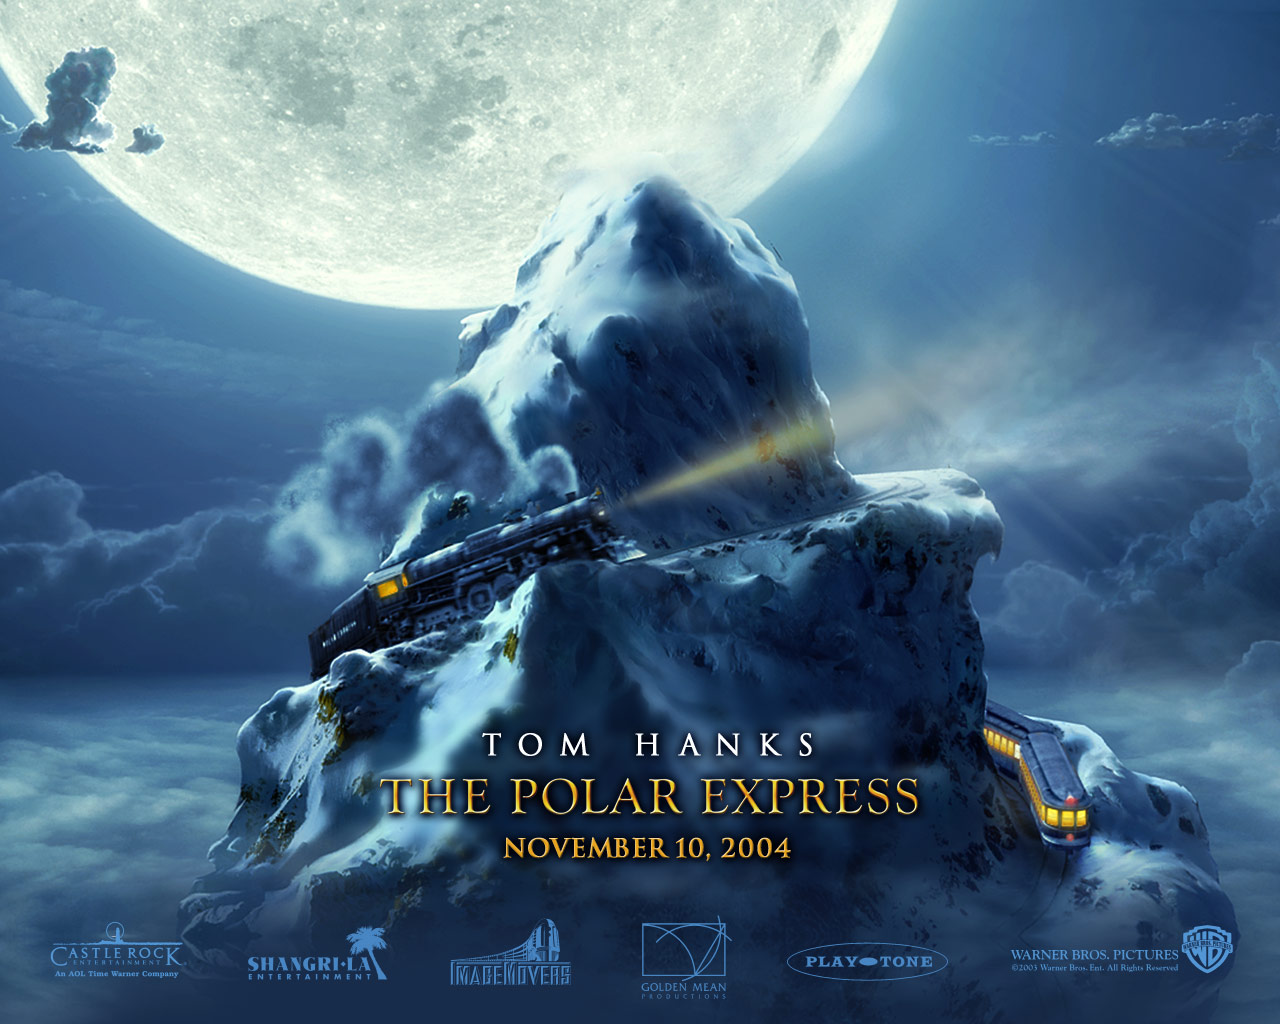 "The Polar Express" desktop wallpaper (1280 x 1024 pixels)